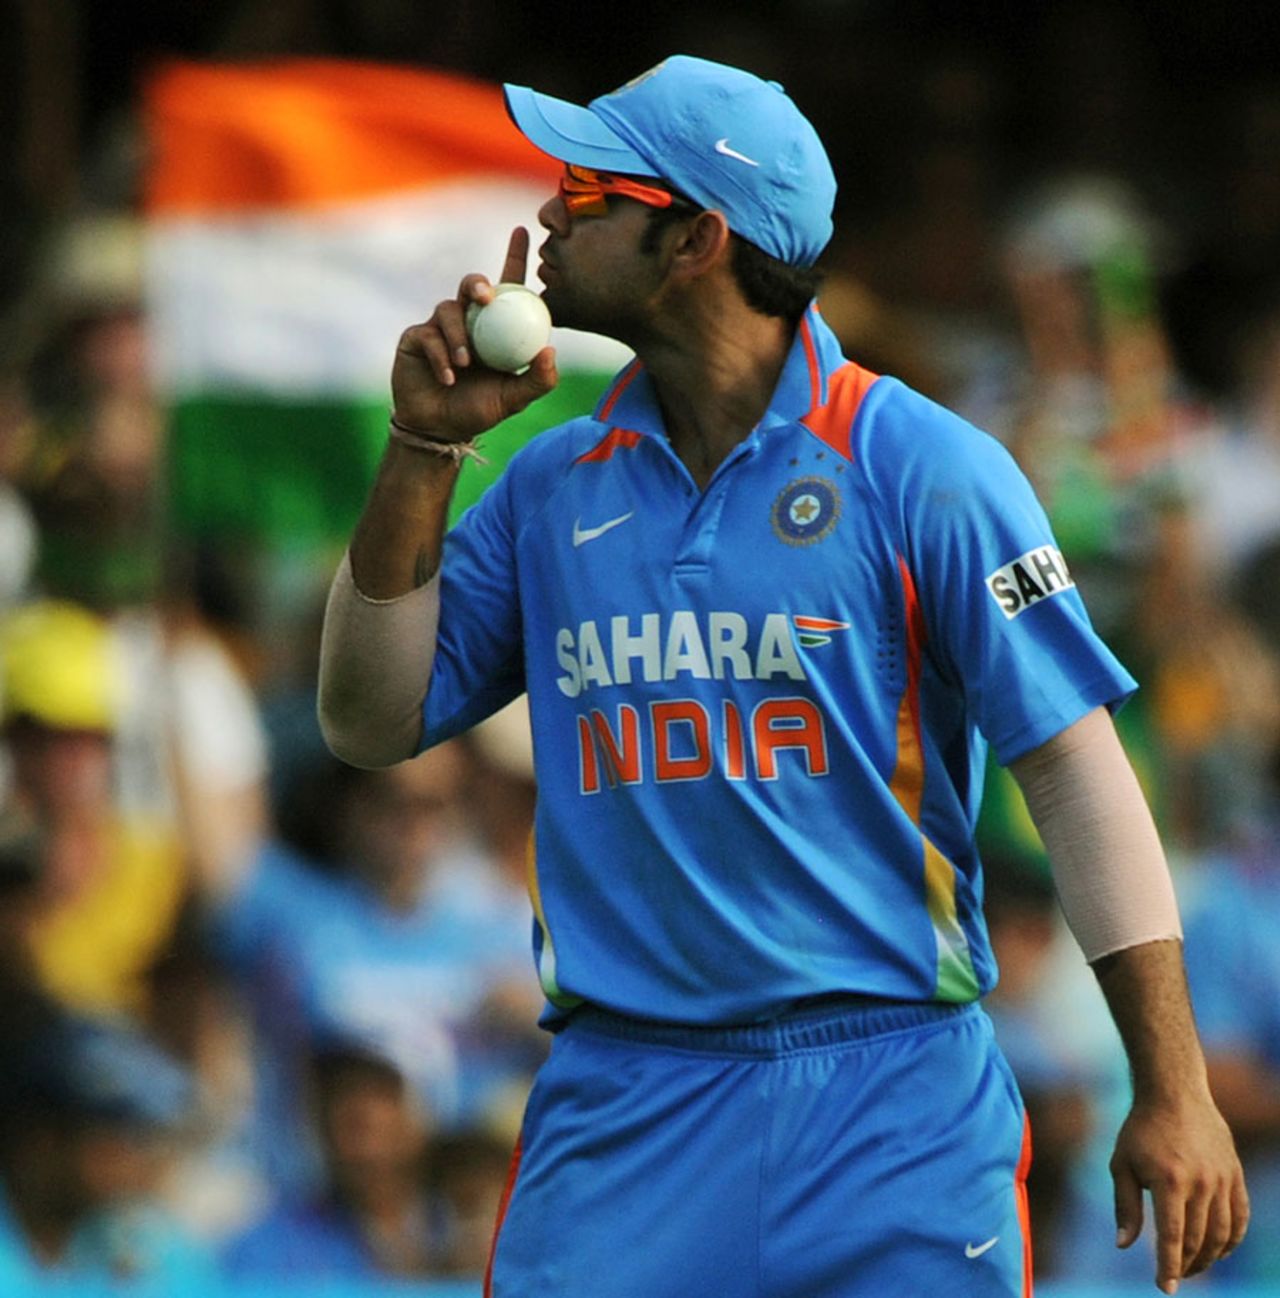 Virat Kohli silences the crowd after taking a catch, Australia v India, CB Series, Brisbane, February 19, 2012